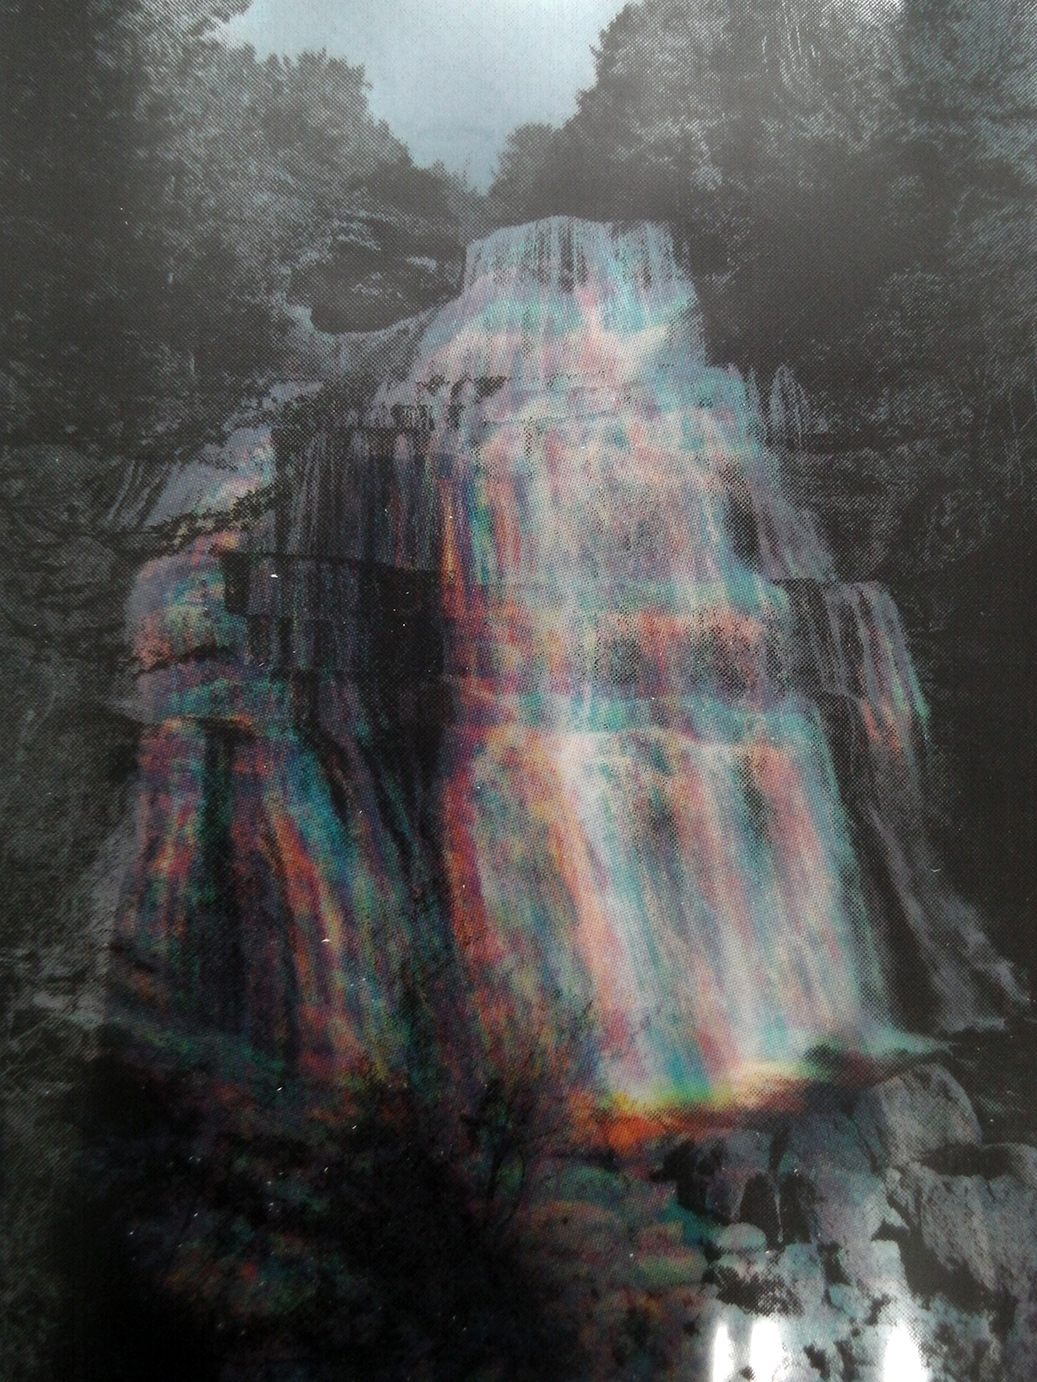  Superimposition of prints on transparent films to reproduce a four-color process